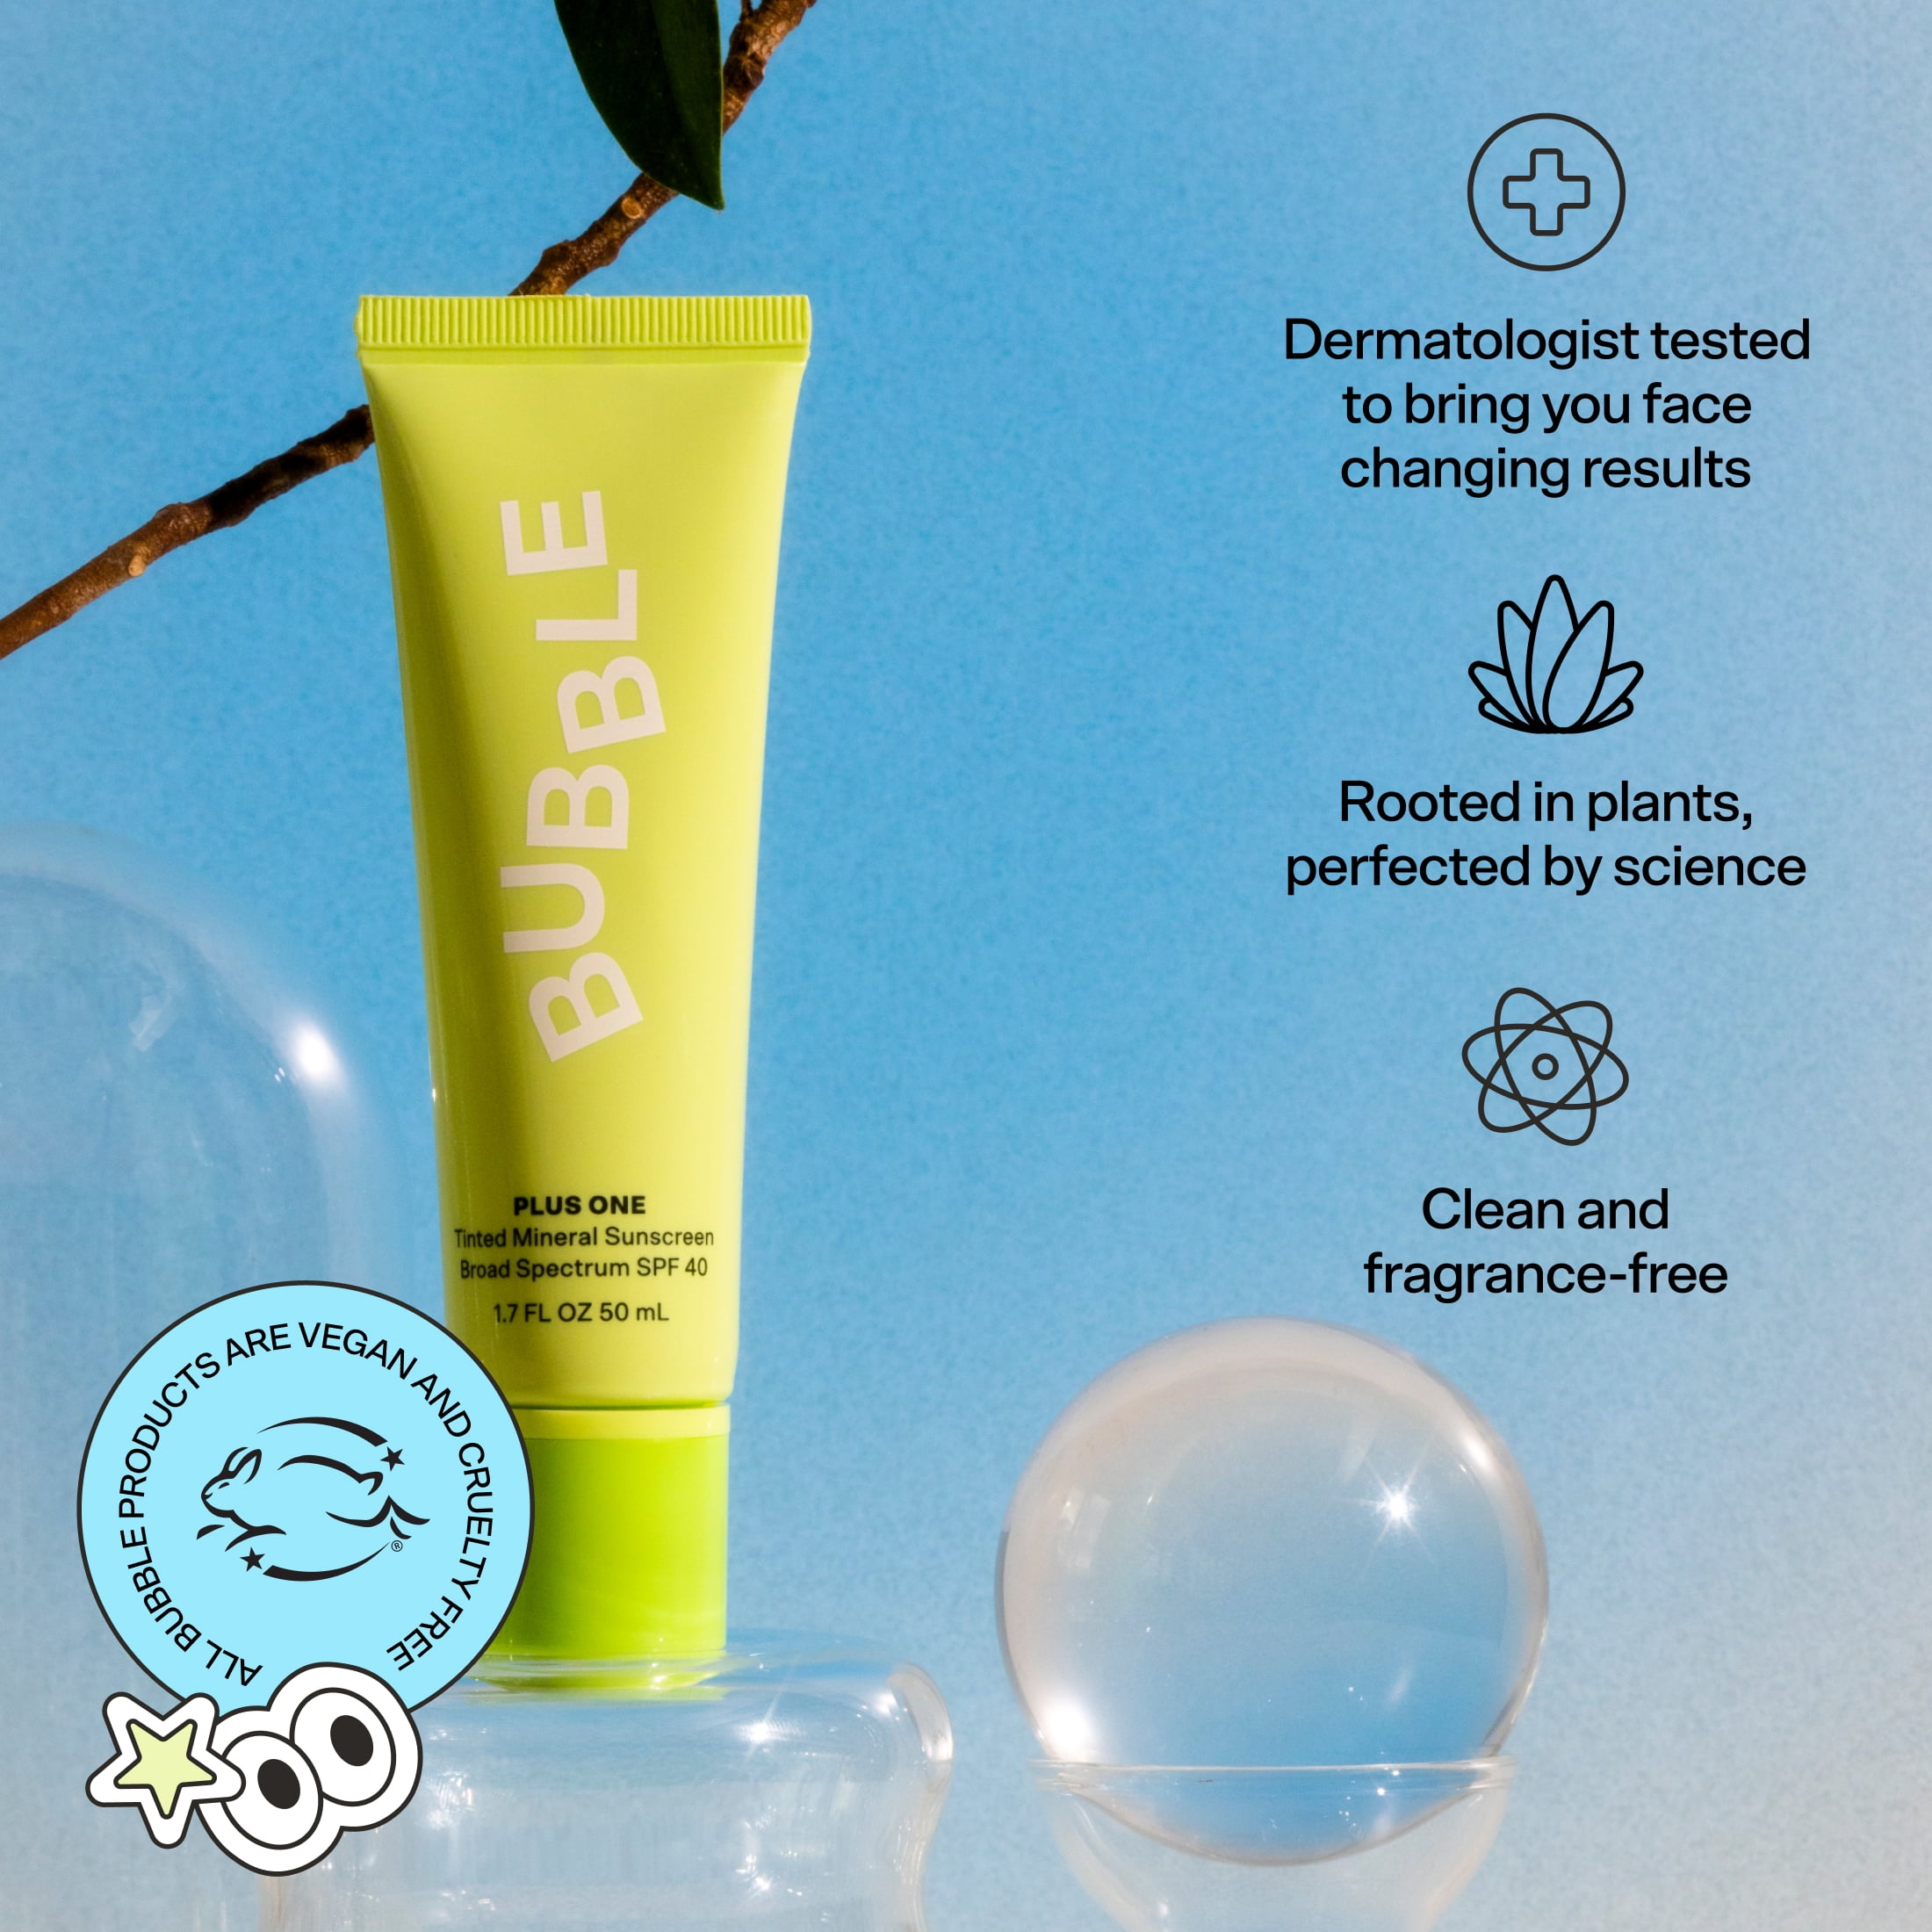 Bubble Skincare Sunscreen Solar Mate Plus One Review